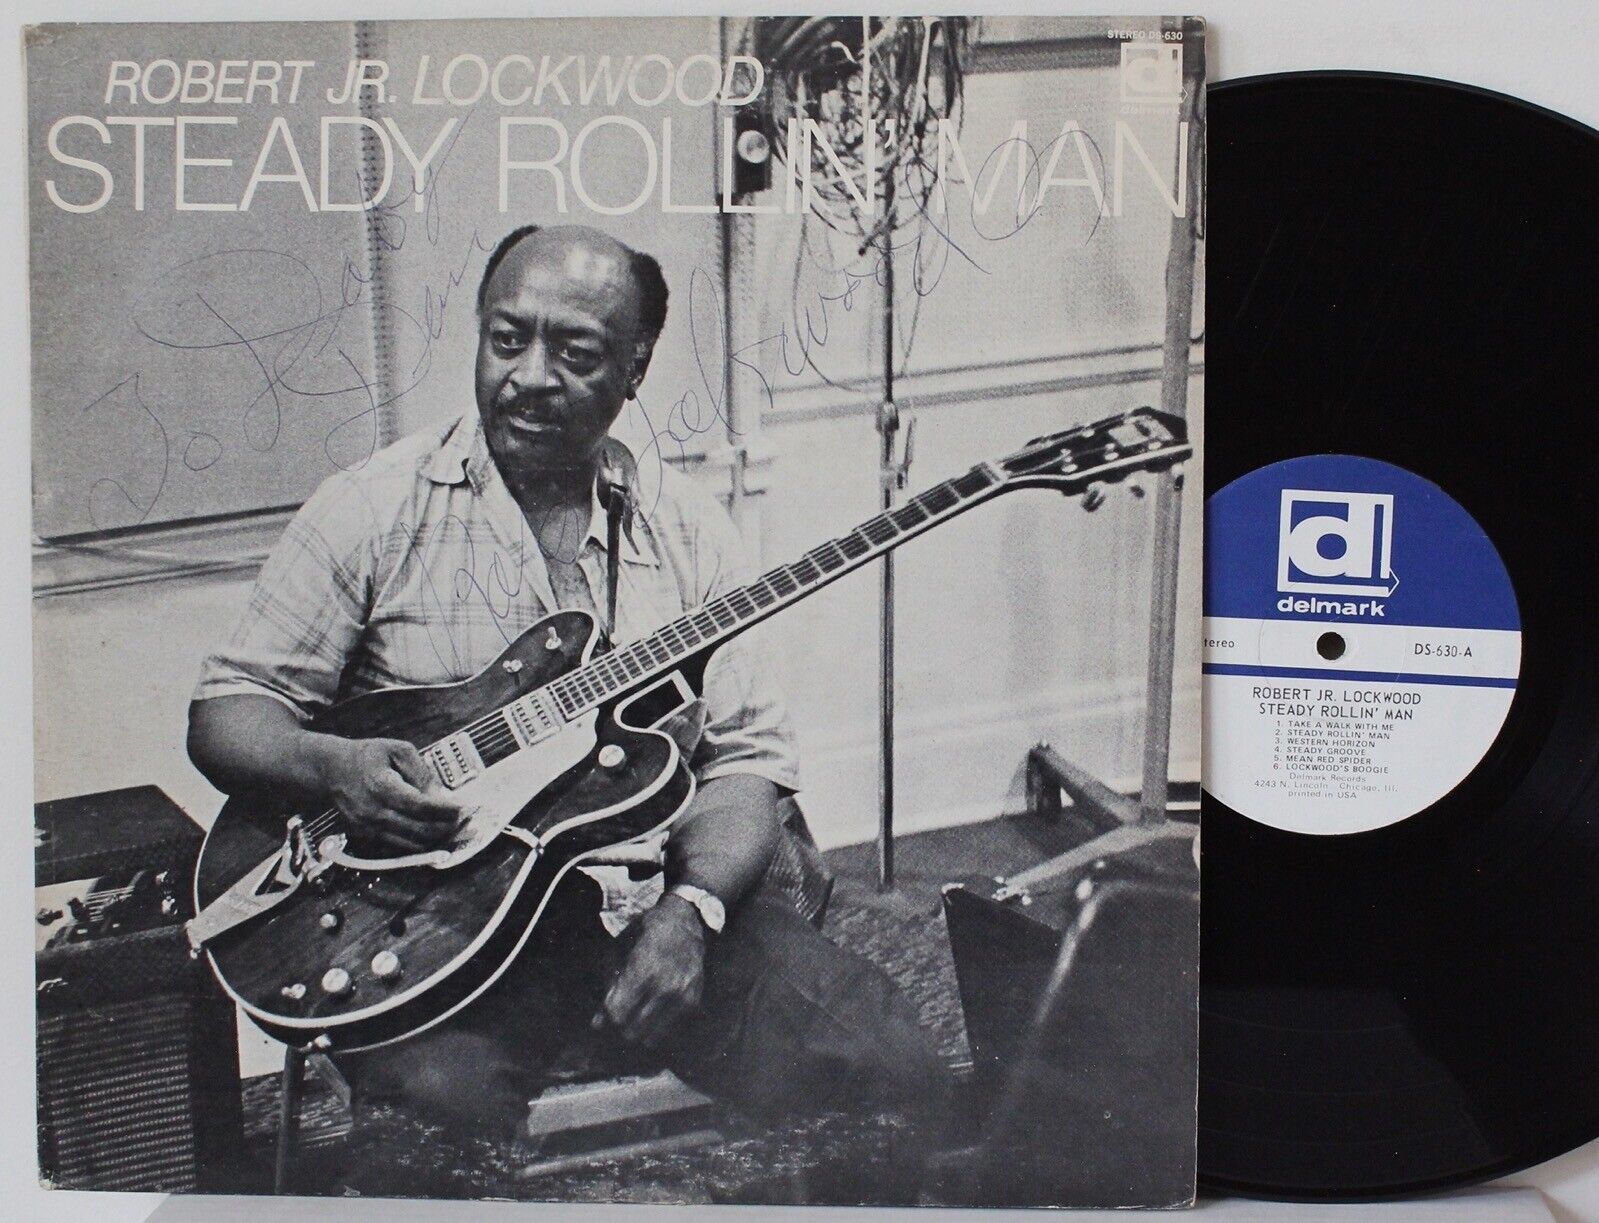 Robert Jr. Lockwood LP “Steady Rollin Man” ~ Delmark 630 ~ Autographed